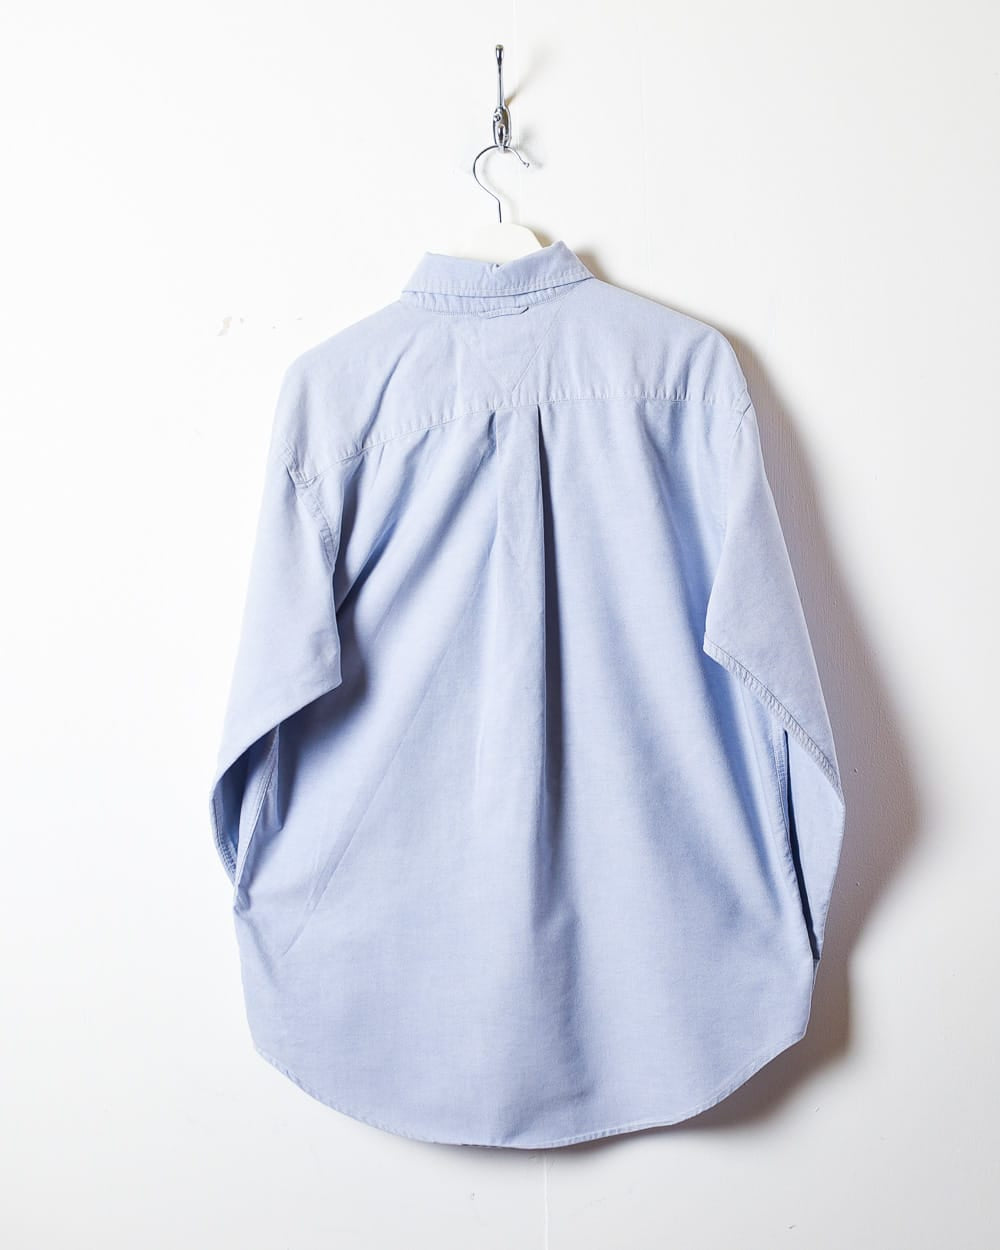 BabyBlue Tommy Hilfiger Shirt - Medium